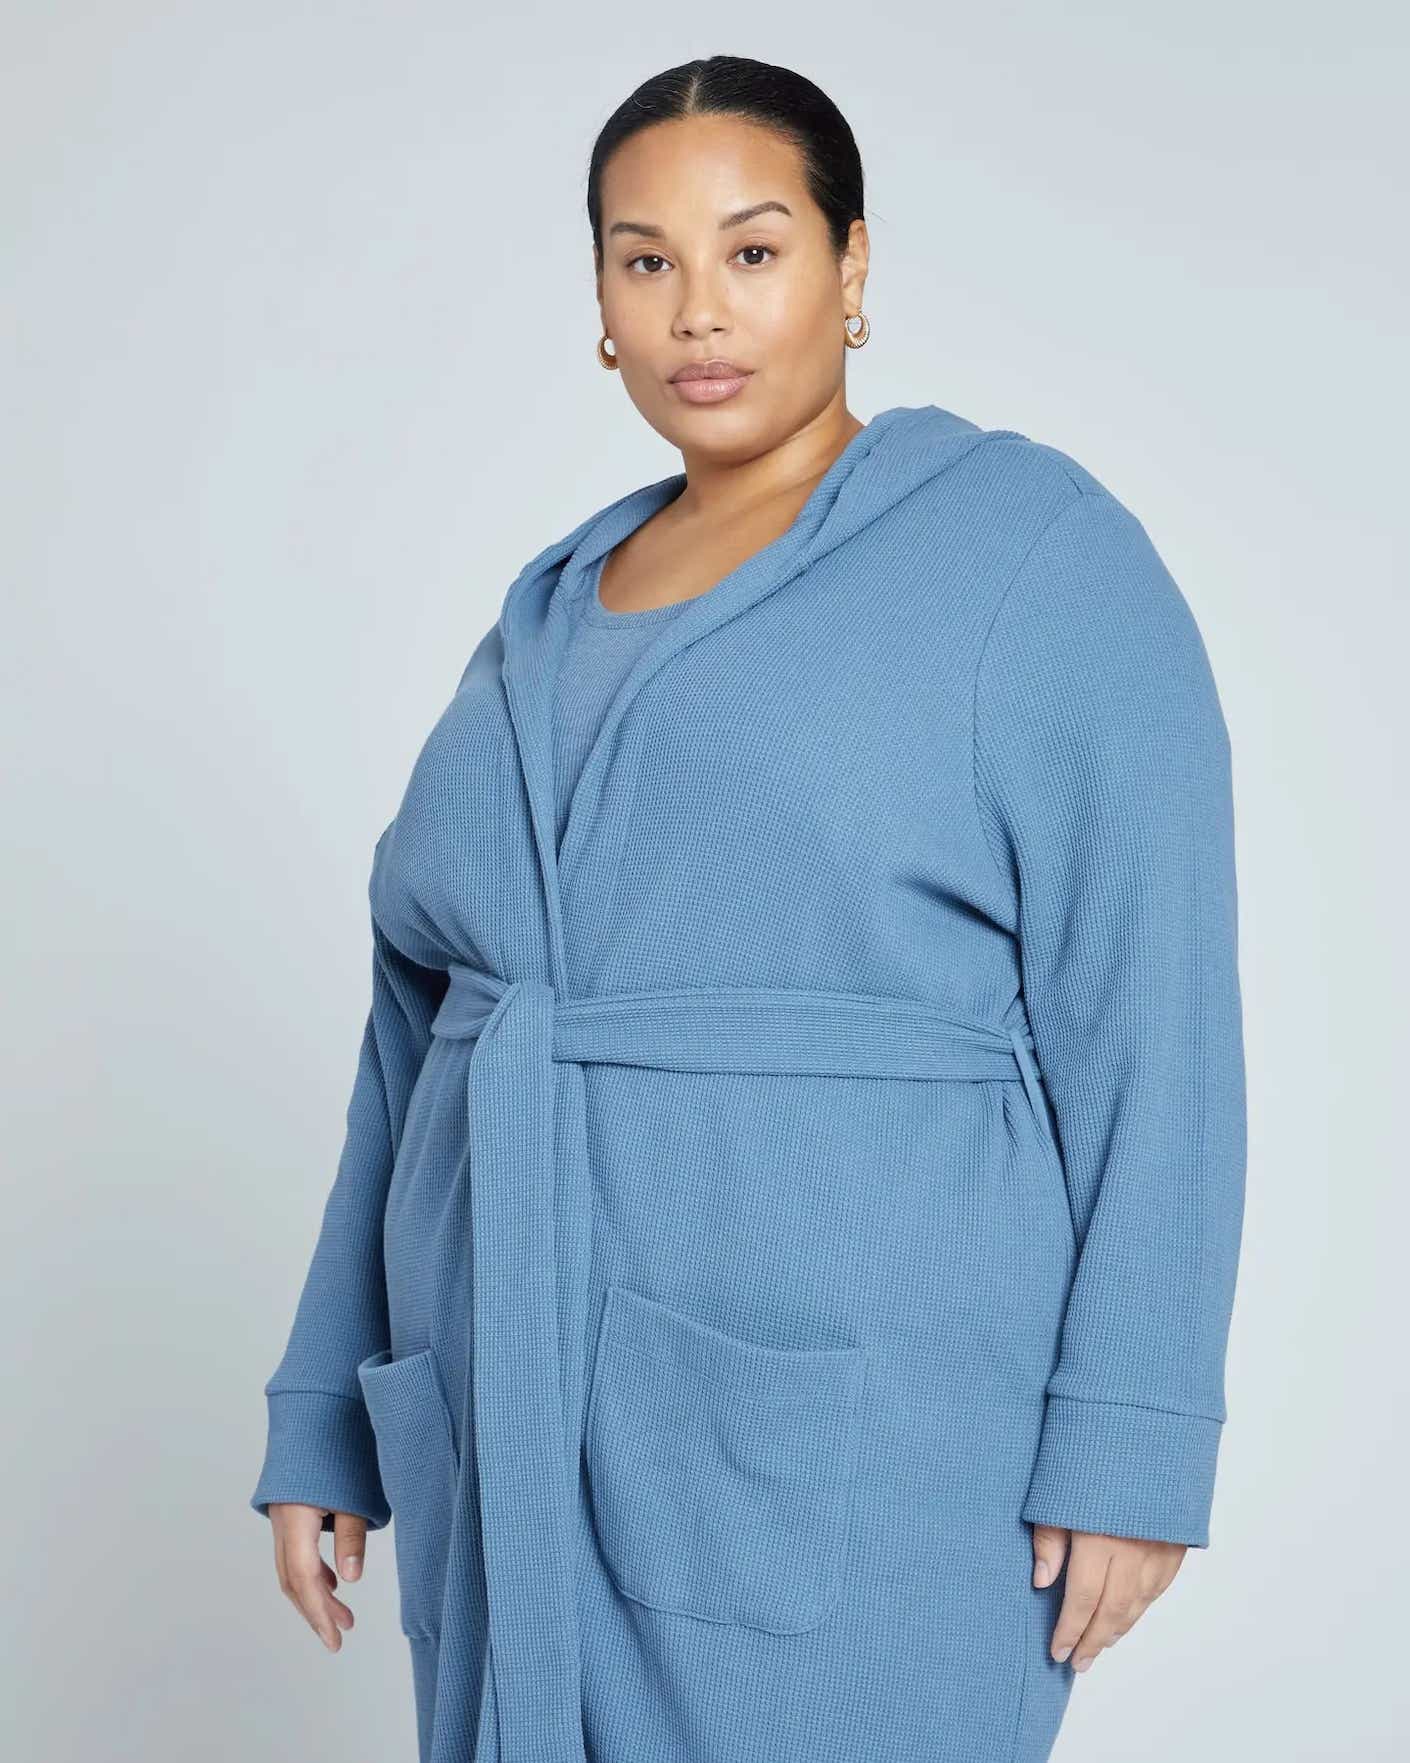 A woman wears a lightweight waffle knit robe in a creamy blue shade.